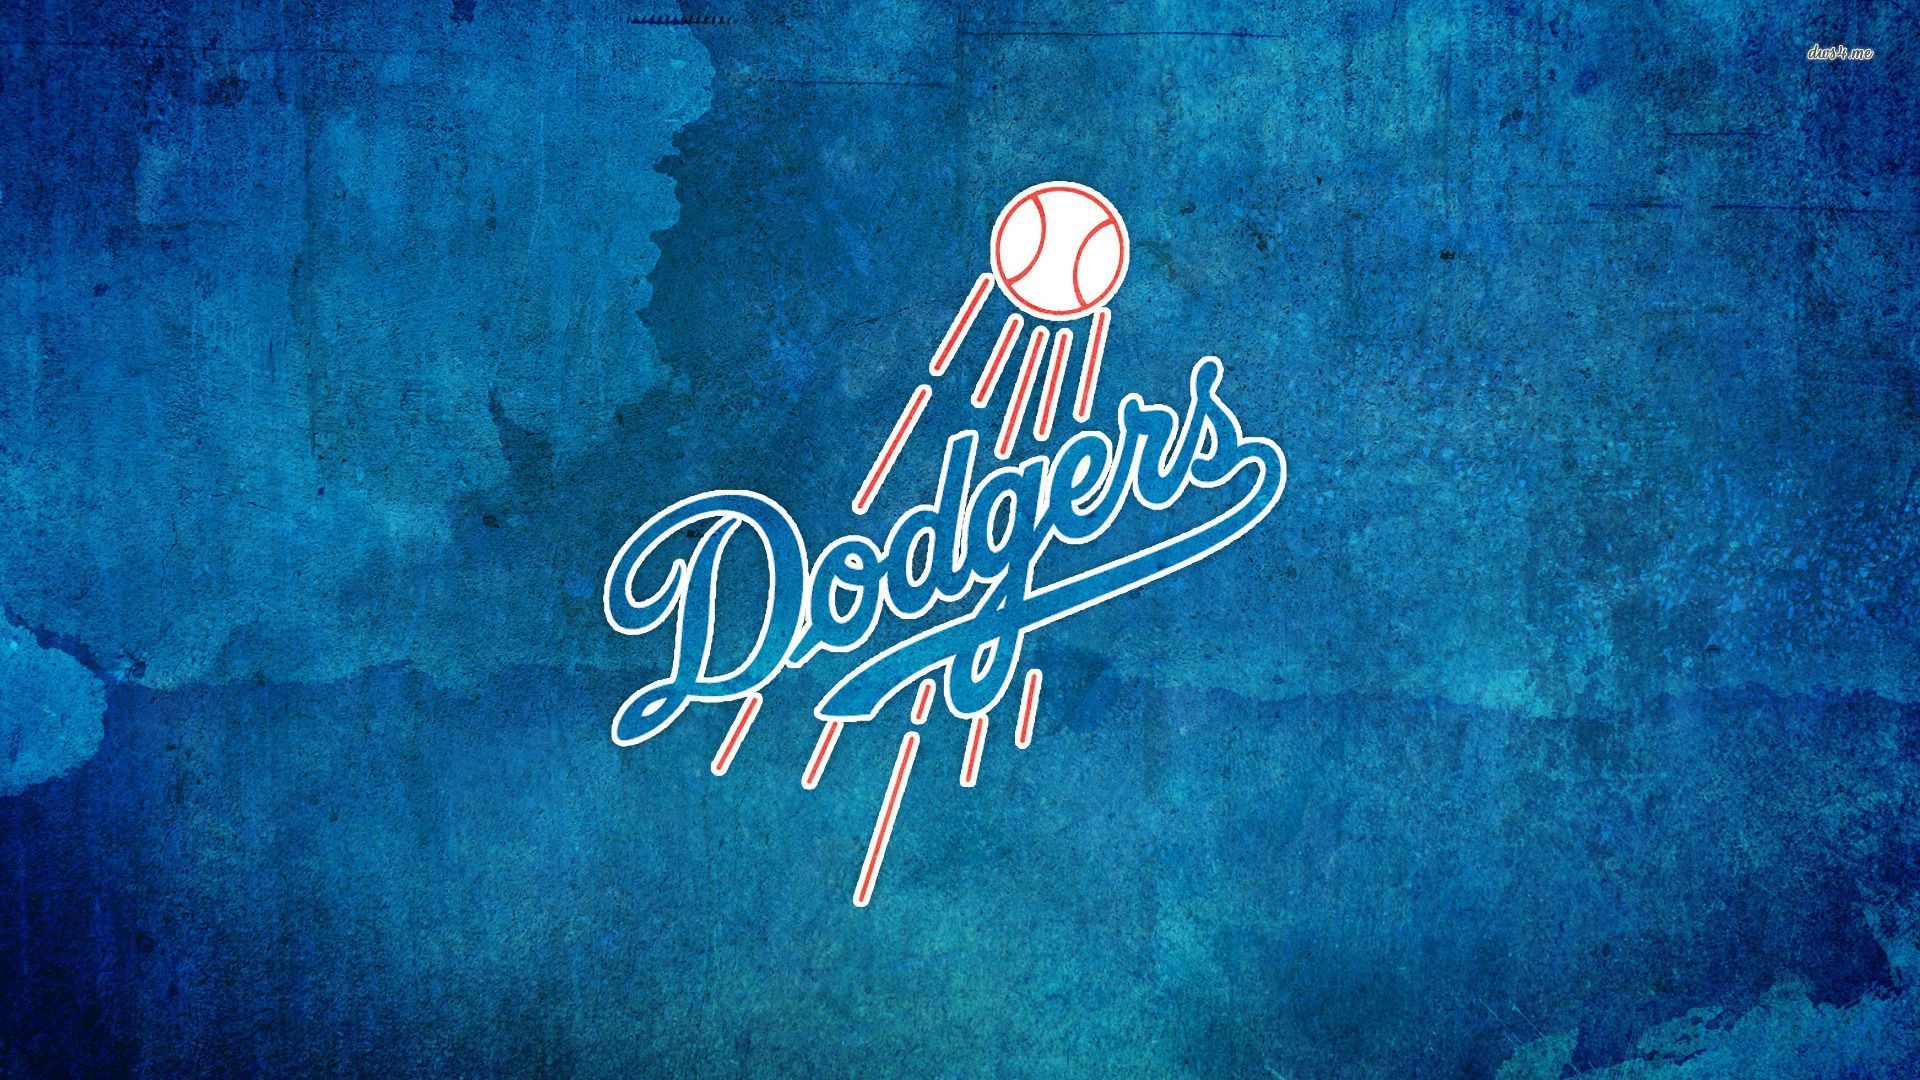 Los Angeles Dodgers wallpaper - Sport wallpapers - #29505